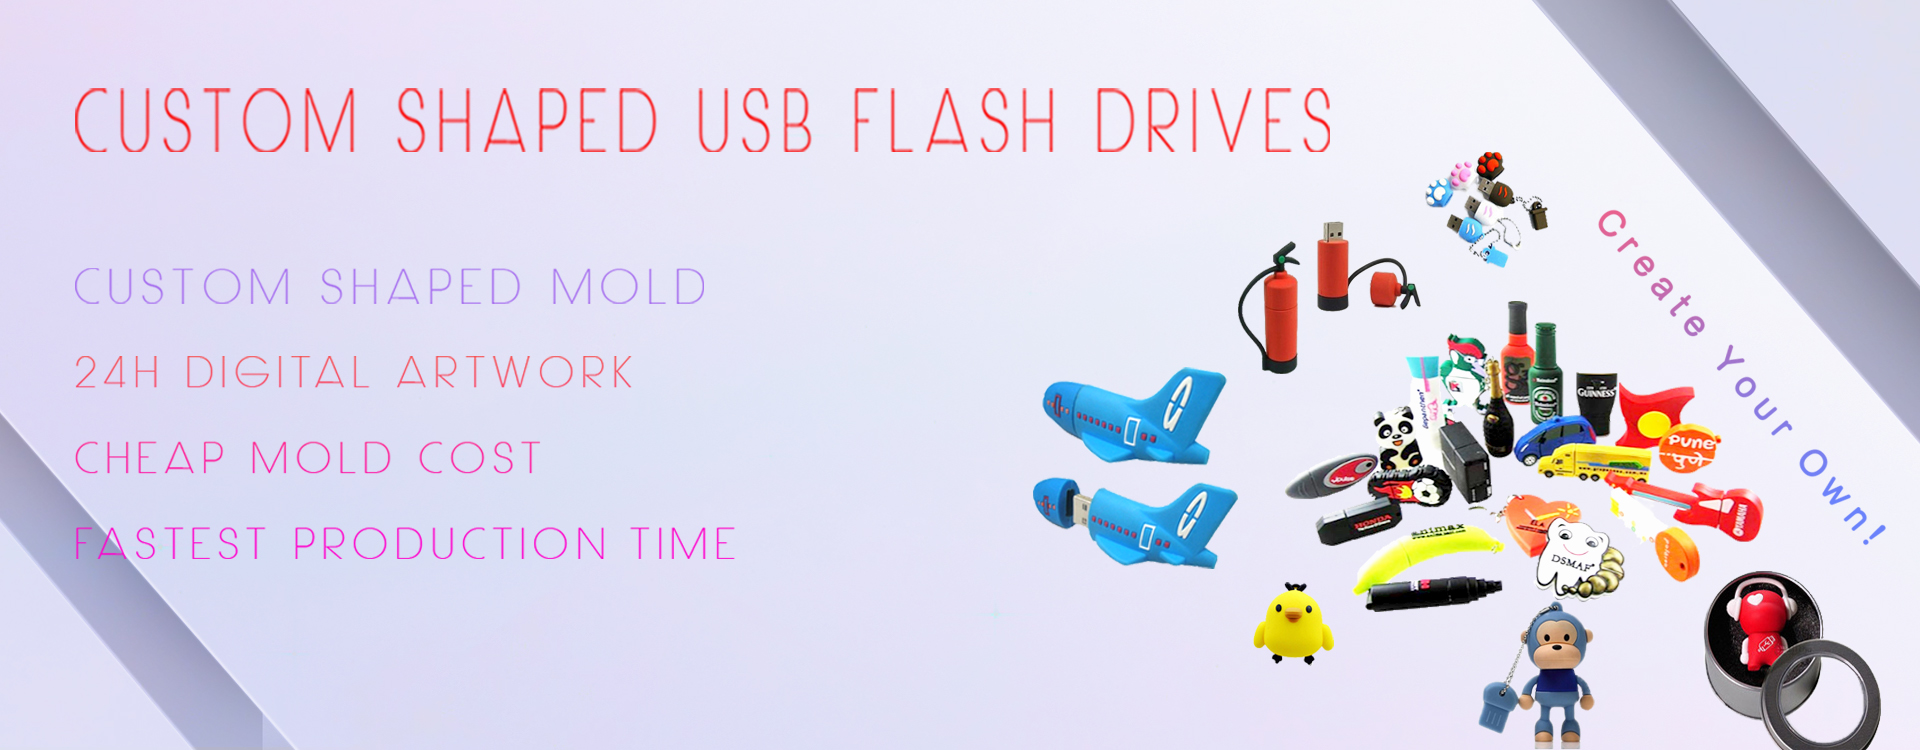 Shaped USB Flash Drives